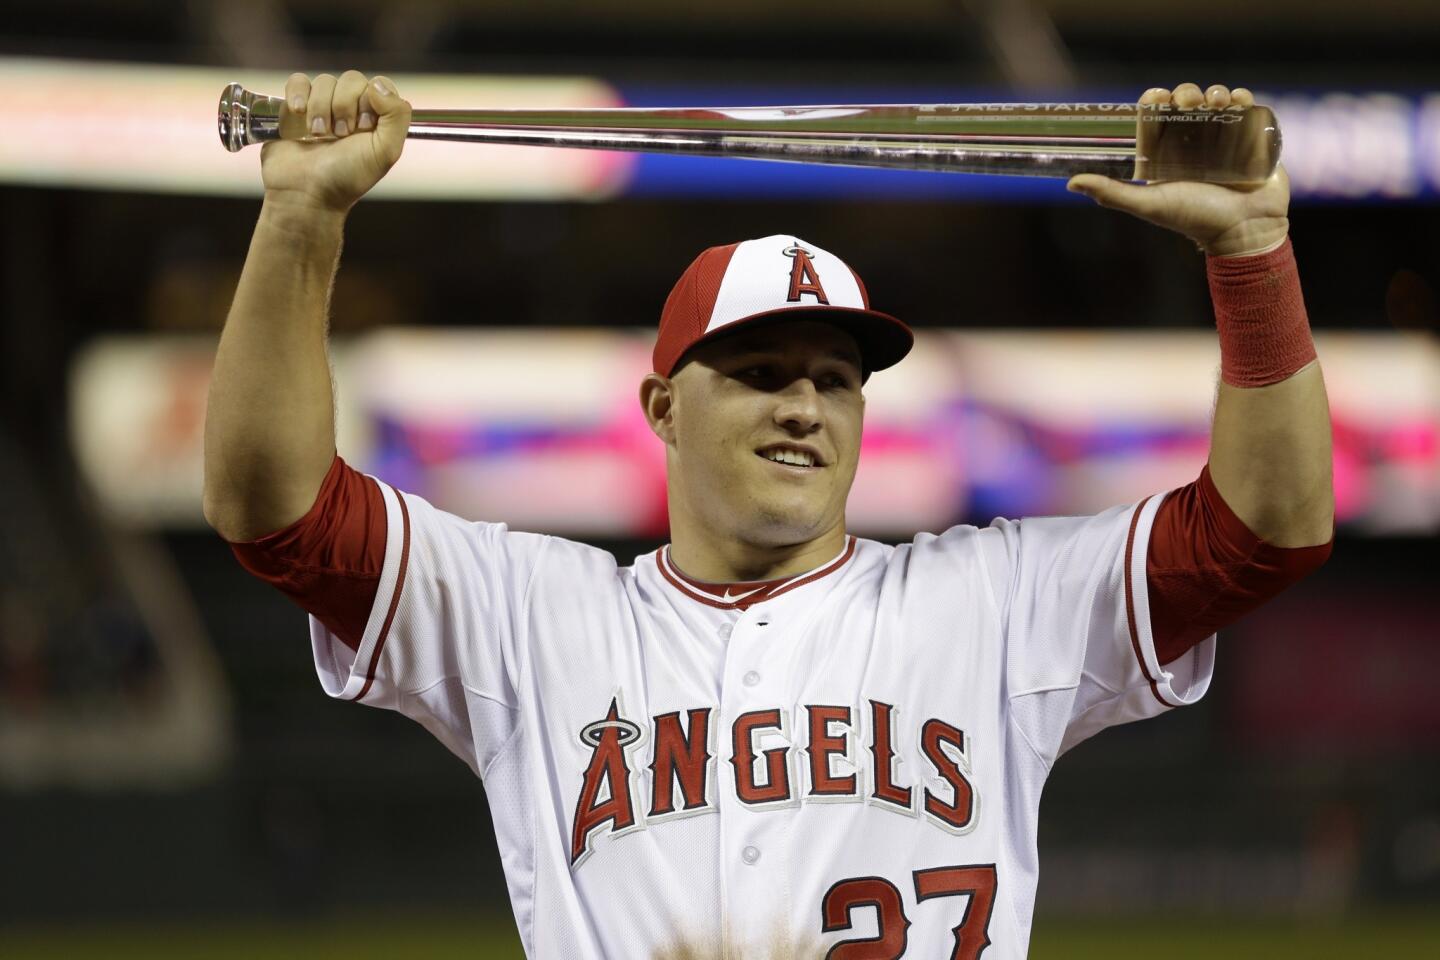 Yankees shortstop Derek Jeter, Angels outfielder Mike Trout donate